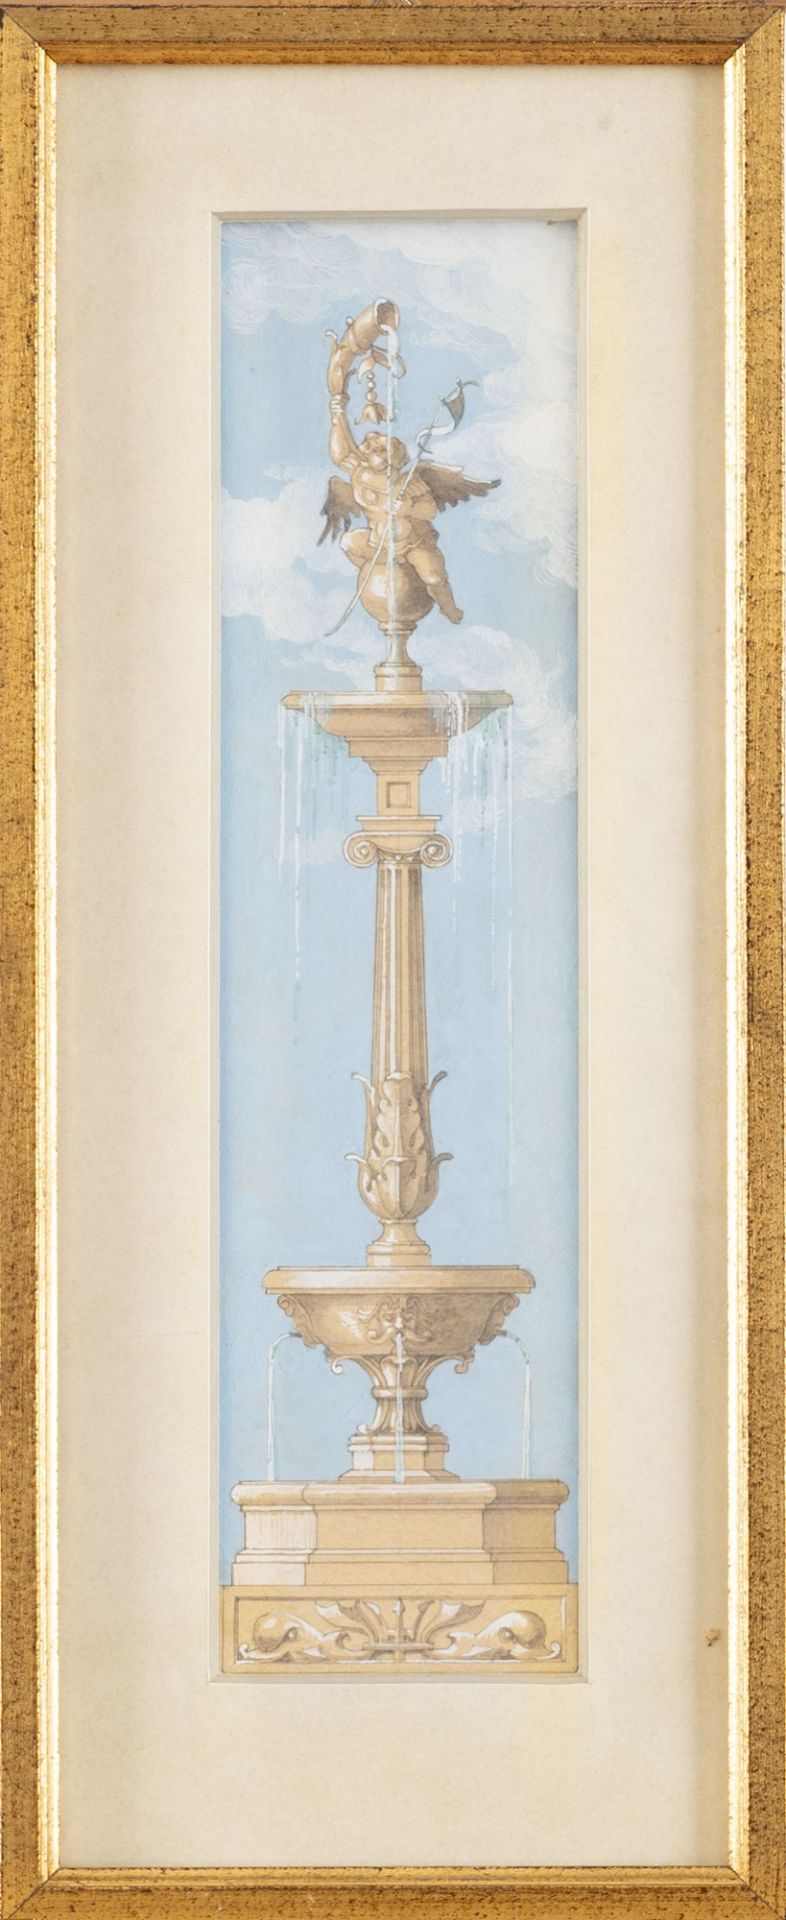 Jules-Frédéric Bouchet (Parigi 1799-1860) - Study for a fountain - Image 2 of 3